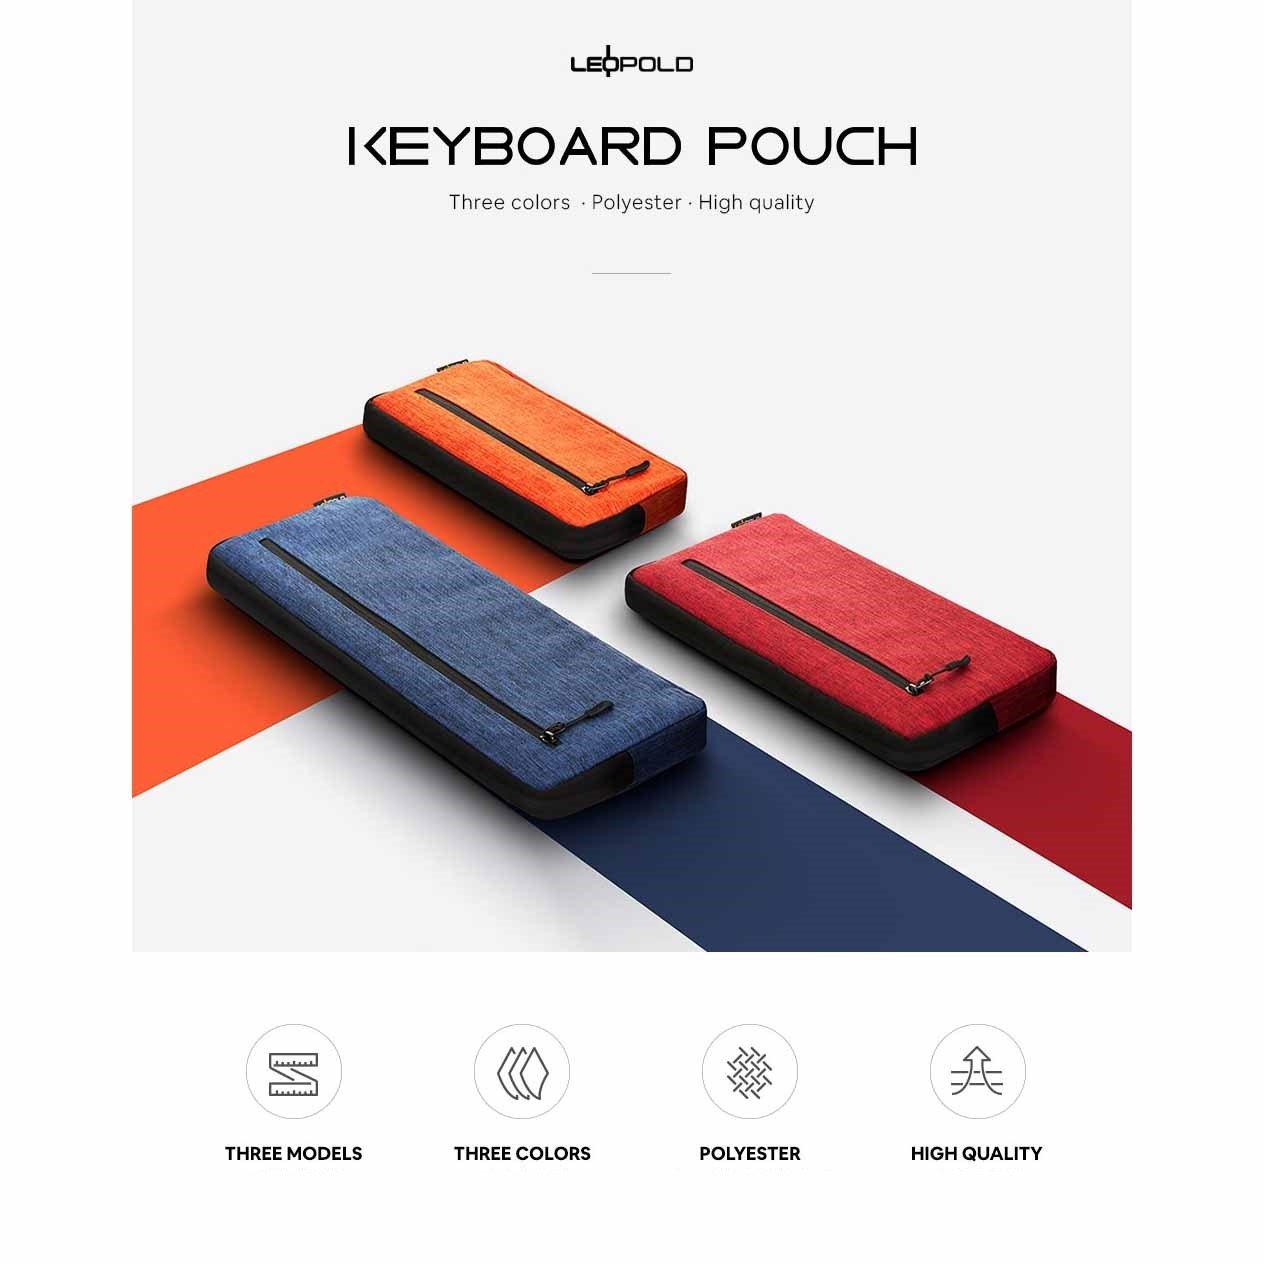 Leopold Canvas Keyboard Bag - Mini / 60% / 65% Keyboard Carrying Case MKCTU4X8VI |39531|